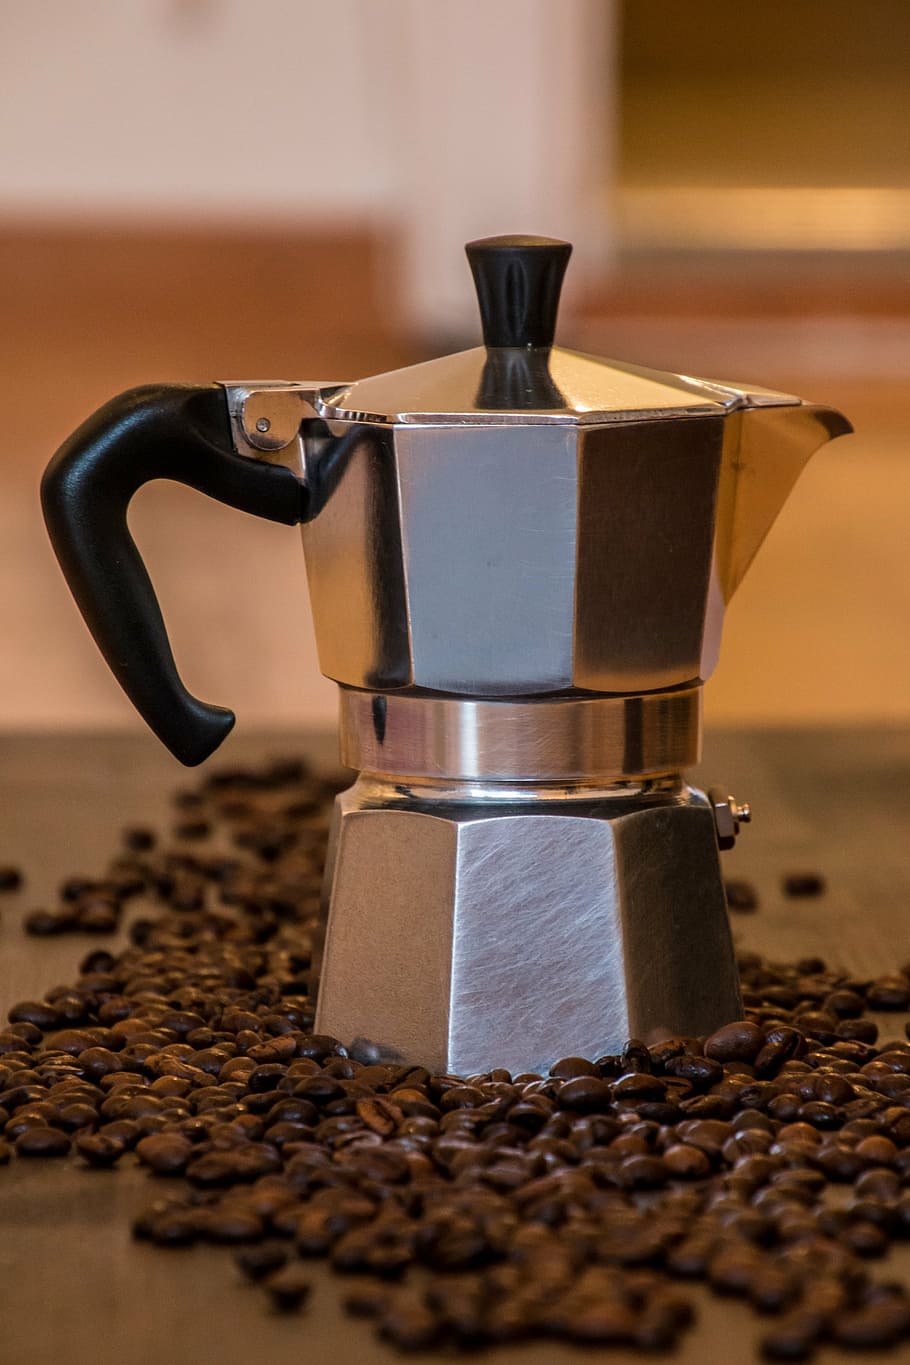 silver coffee pot, coffee, tea, old coffee maker, old italian coffee machine, make coffee, italy, breakfast, coffee hour, preparing coffee